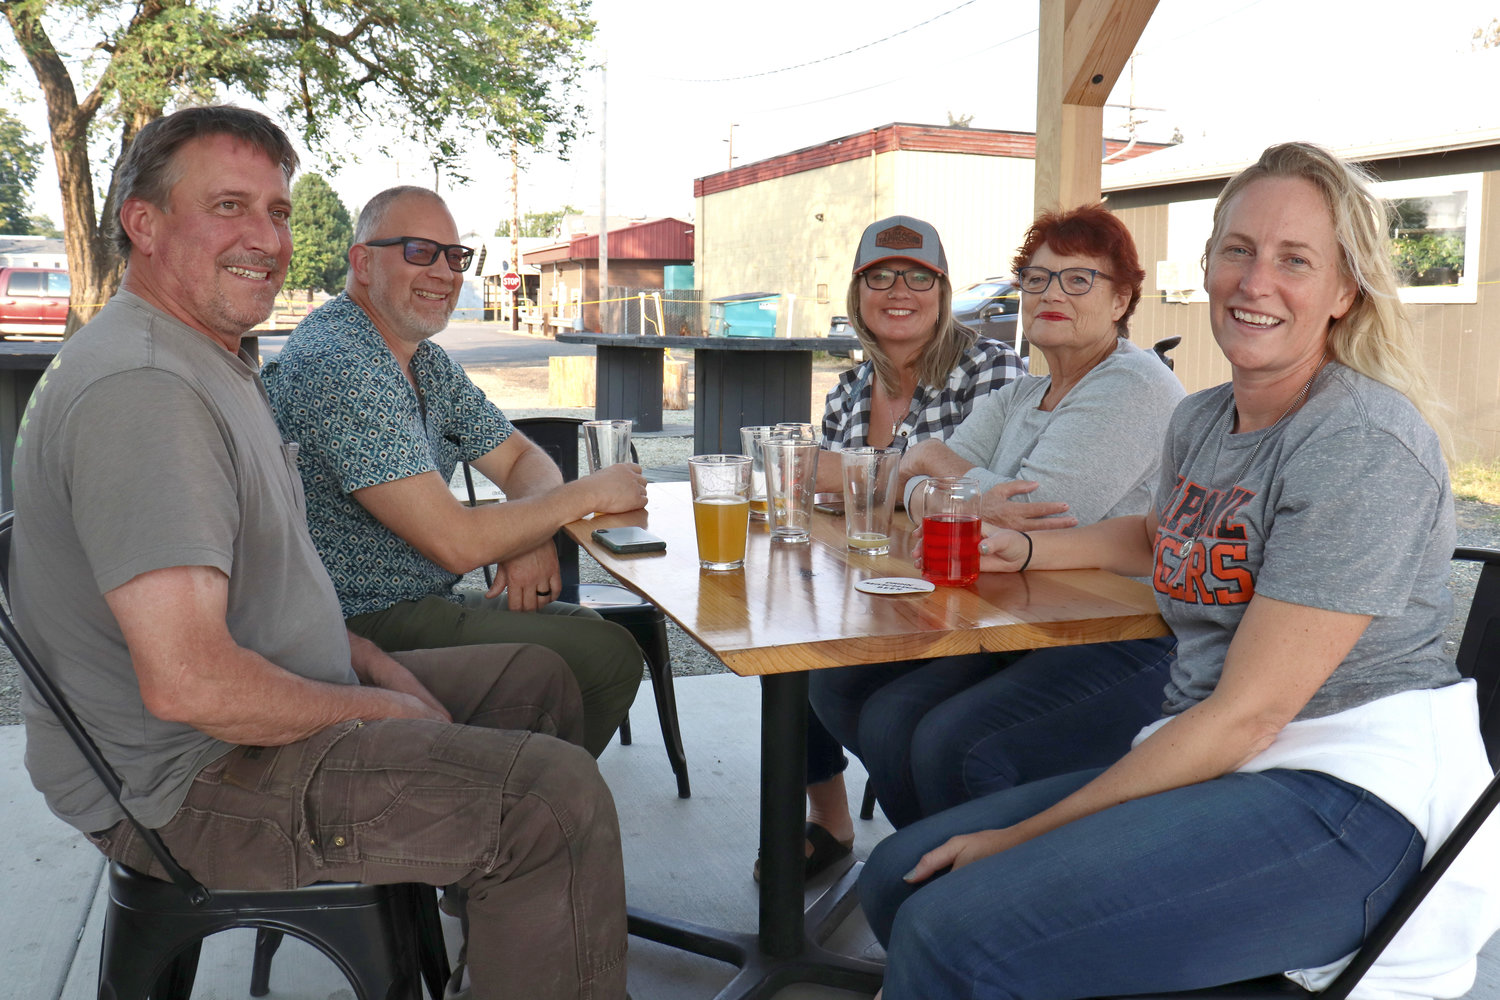 Tasha Landram and family pause for a photo amid drink and conversation at Tumac Taproom in Napavine on Friday.